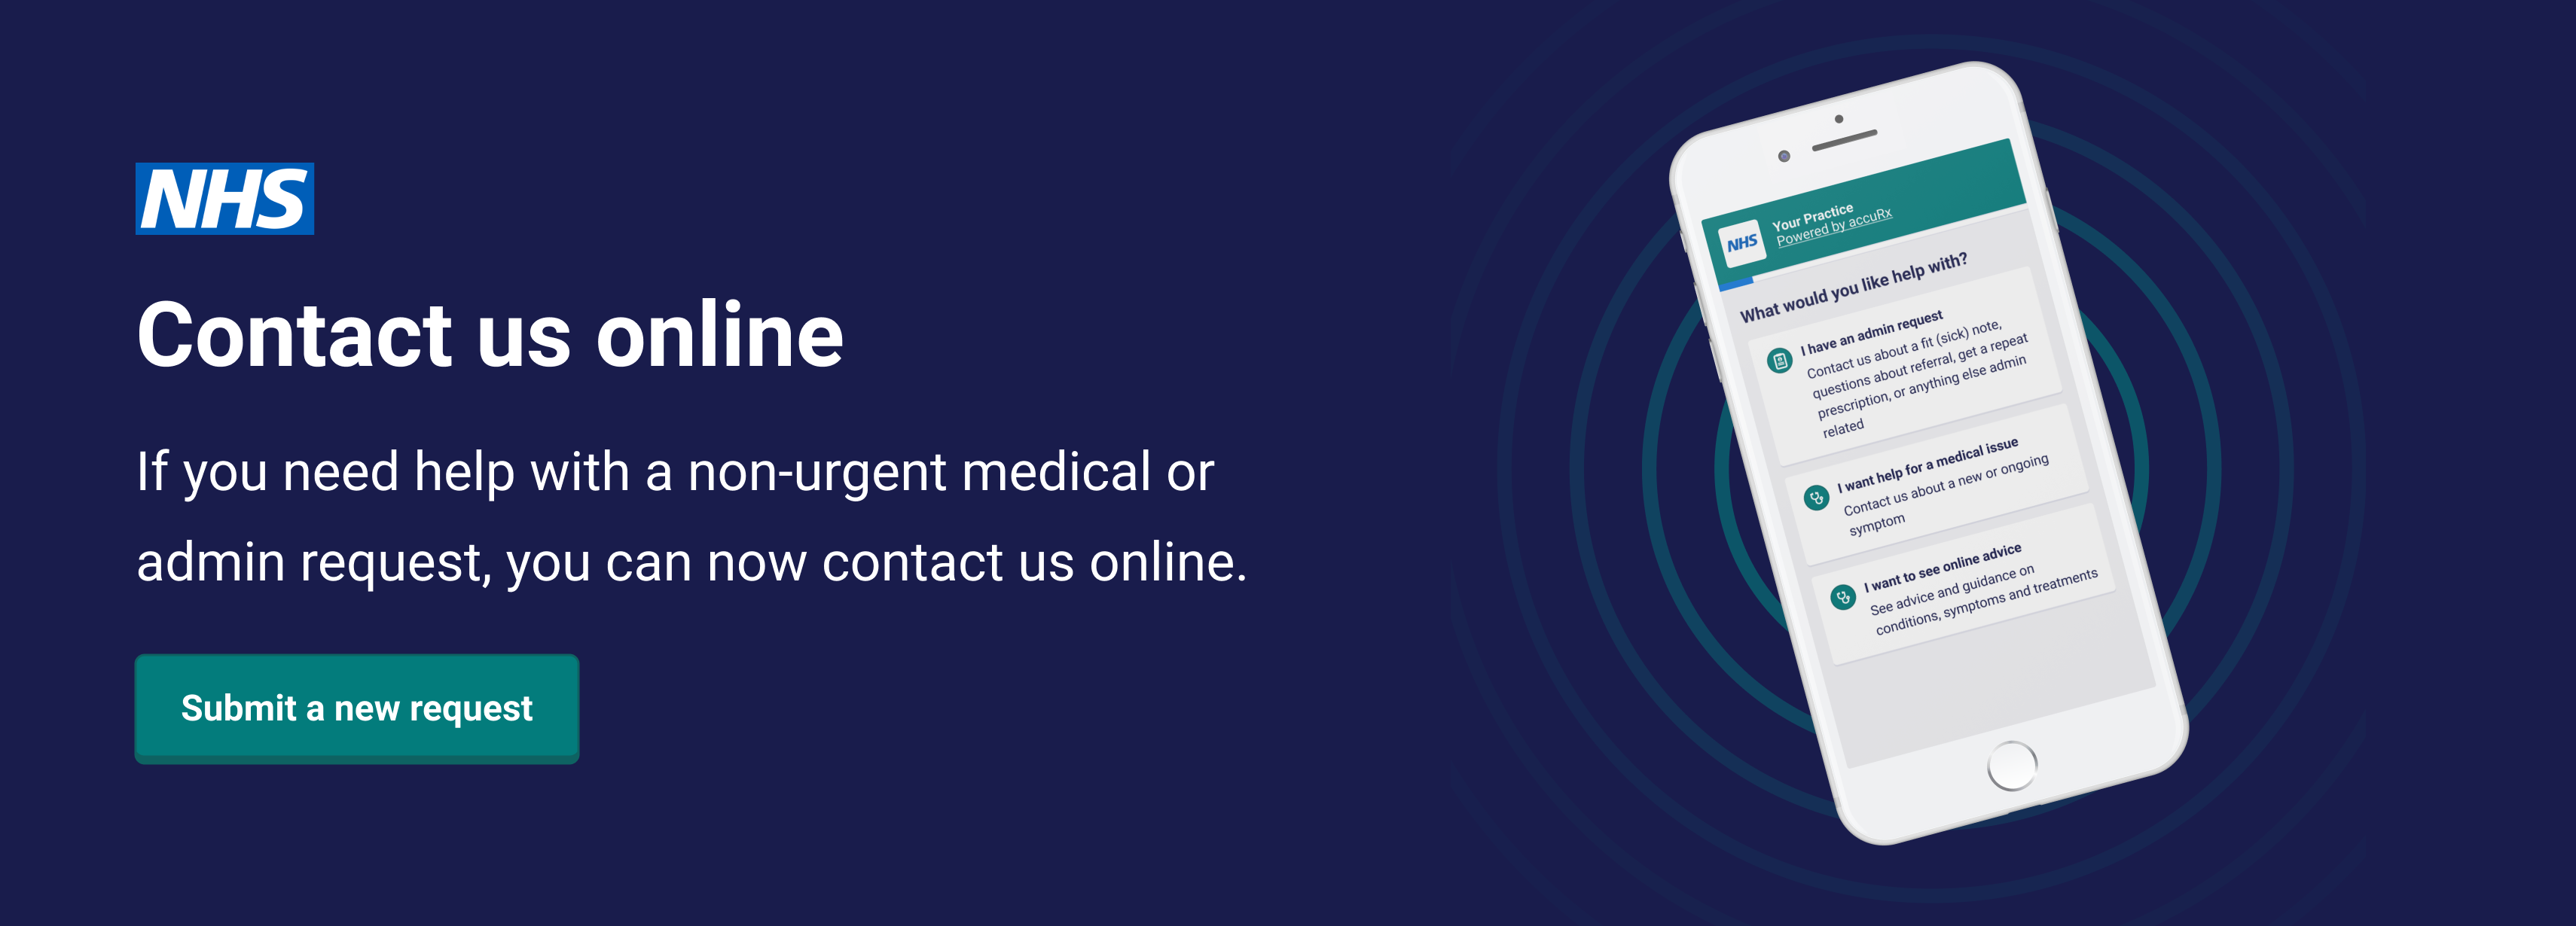 Contact us online, patient triage service